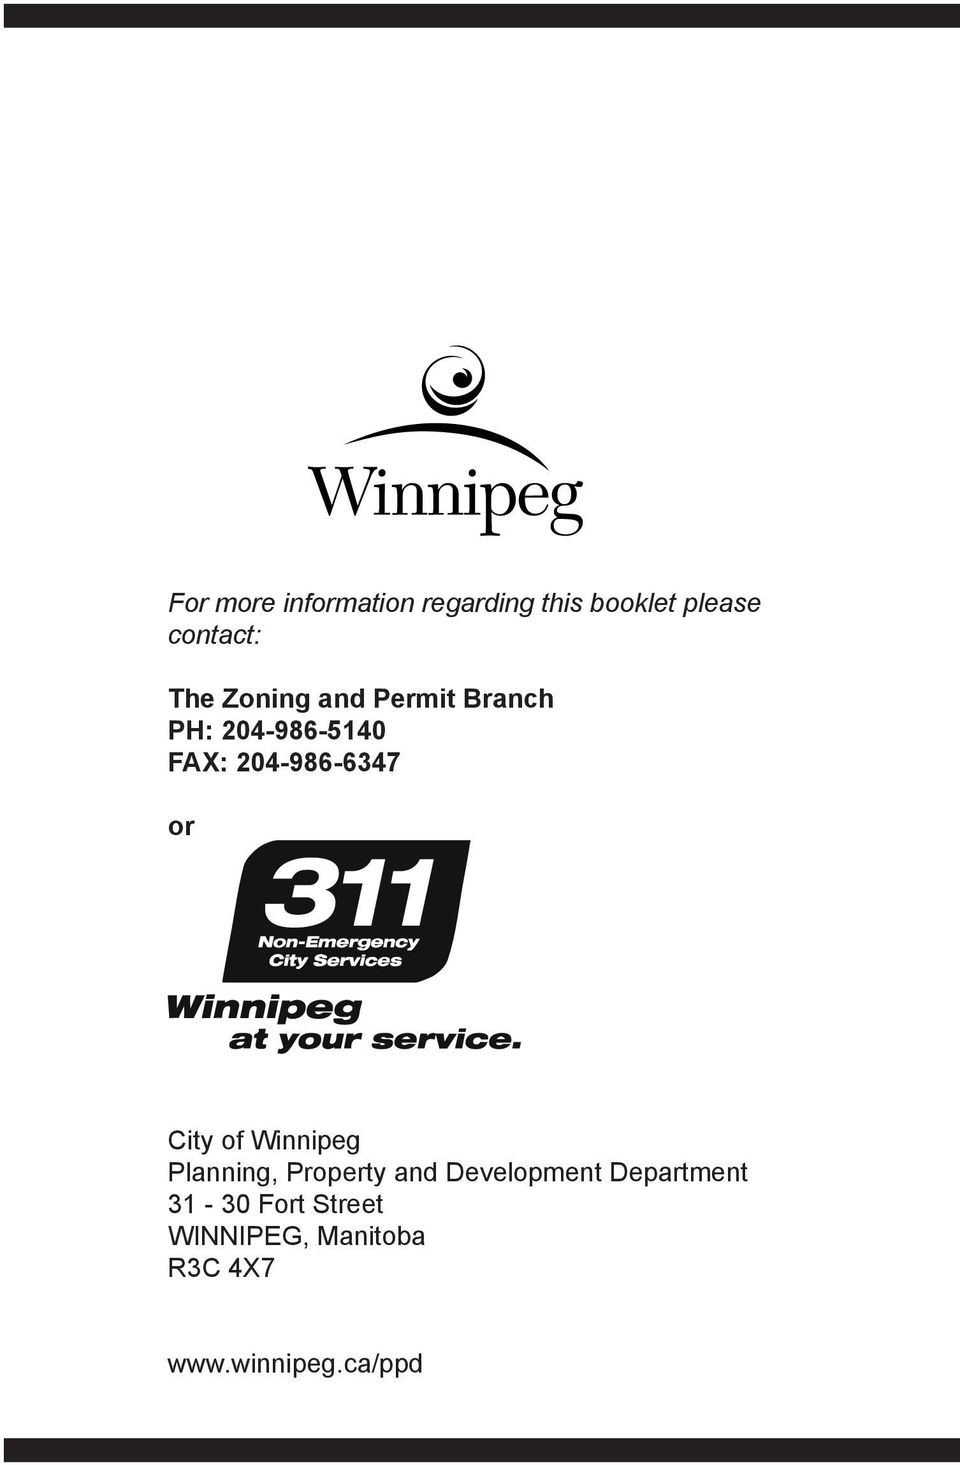 City of Winnipeg Planning, Property and Development Department